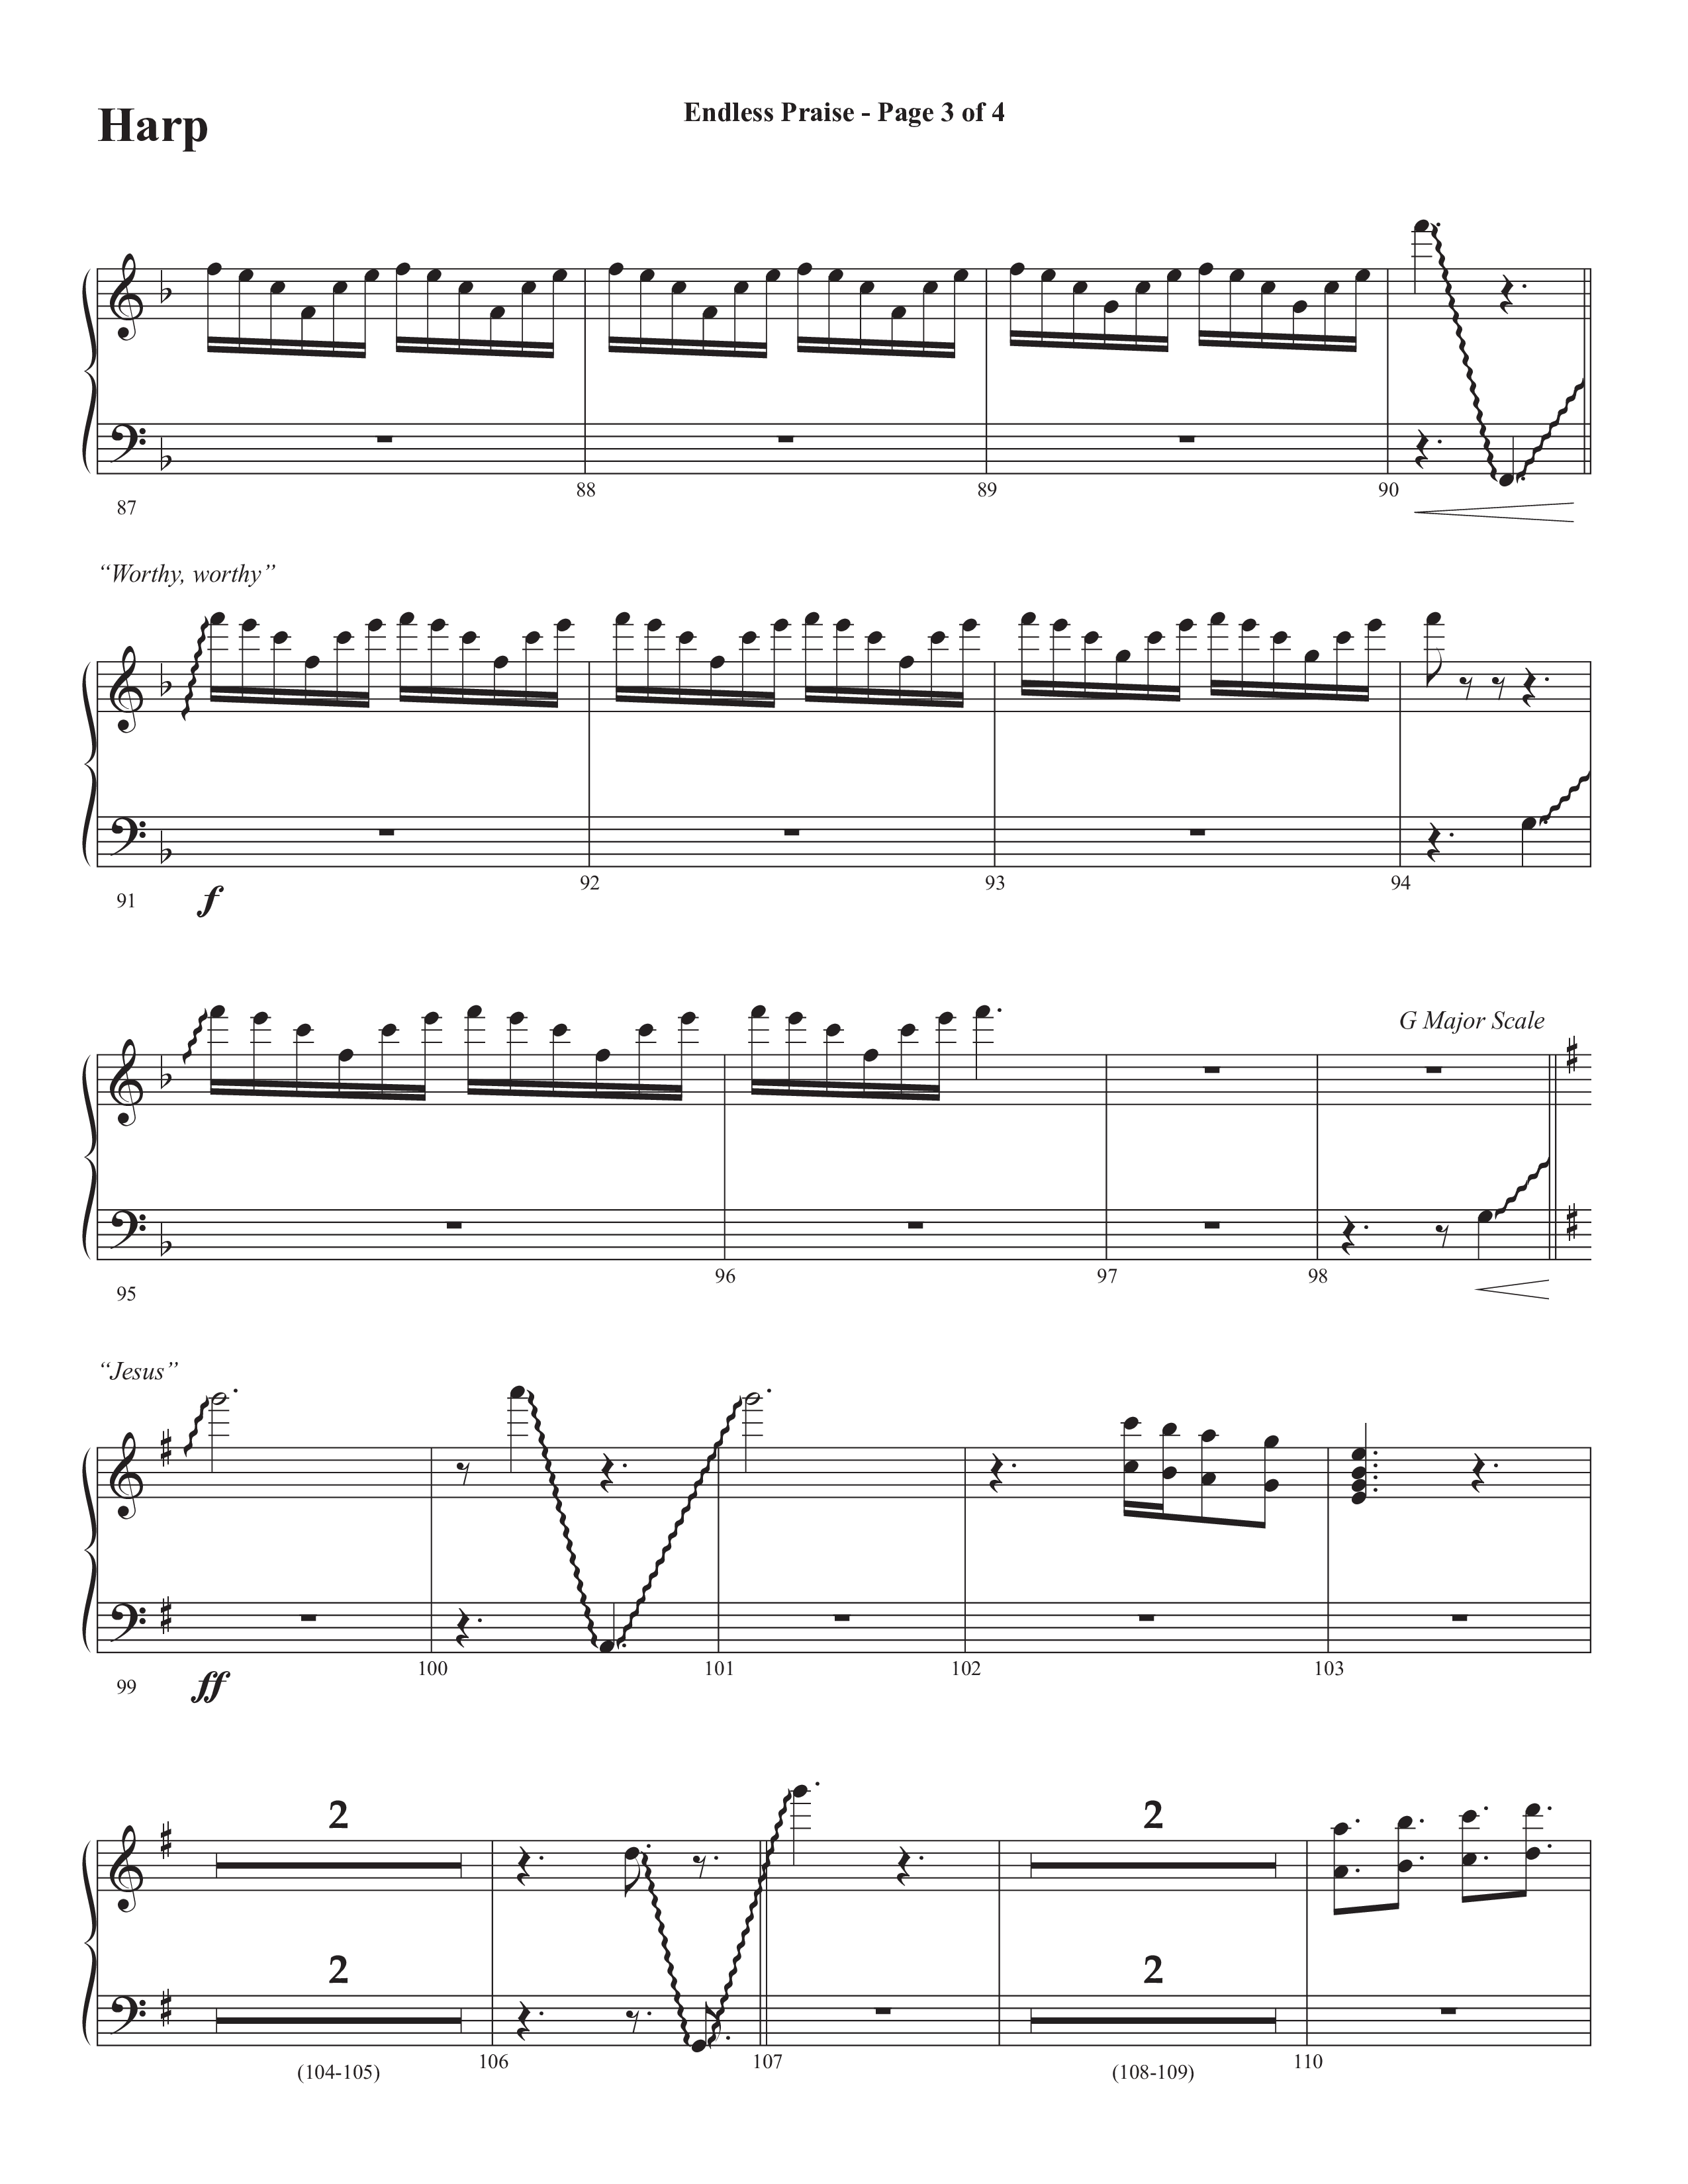 Endless Praise (Choral Anthem SATB) Harp (Semsen Music / Arr. Daniel Semsen)